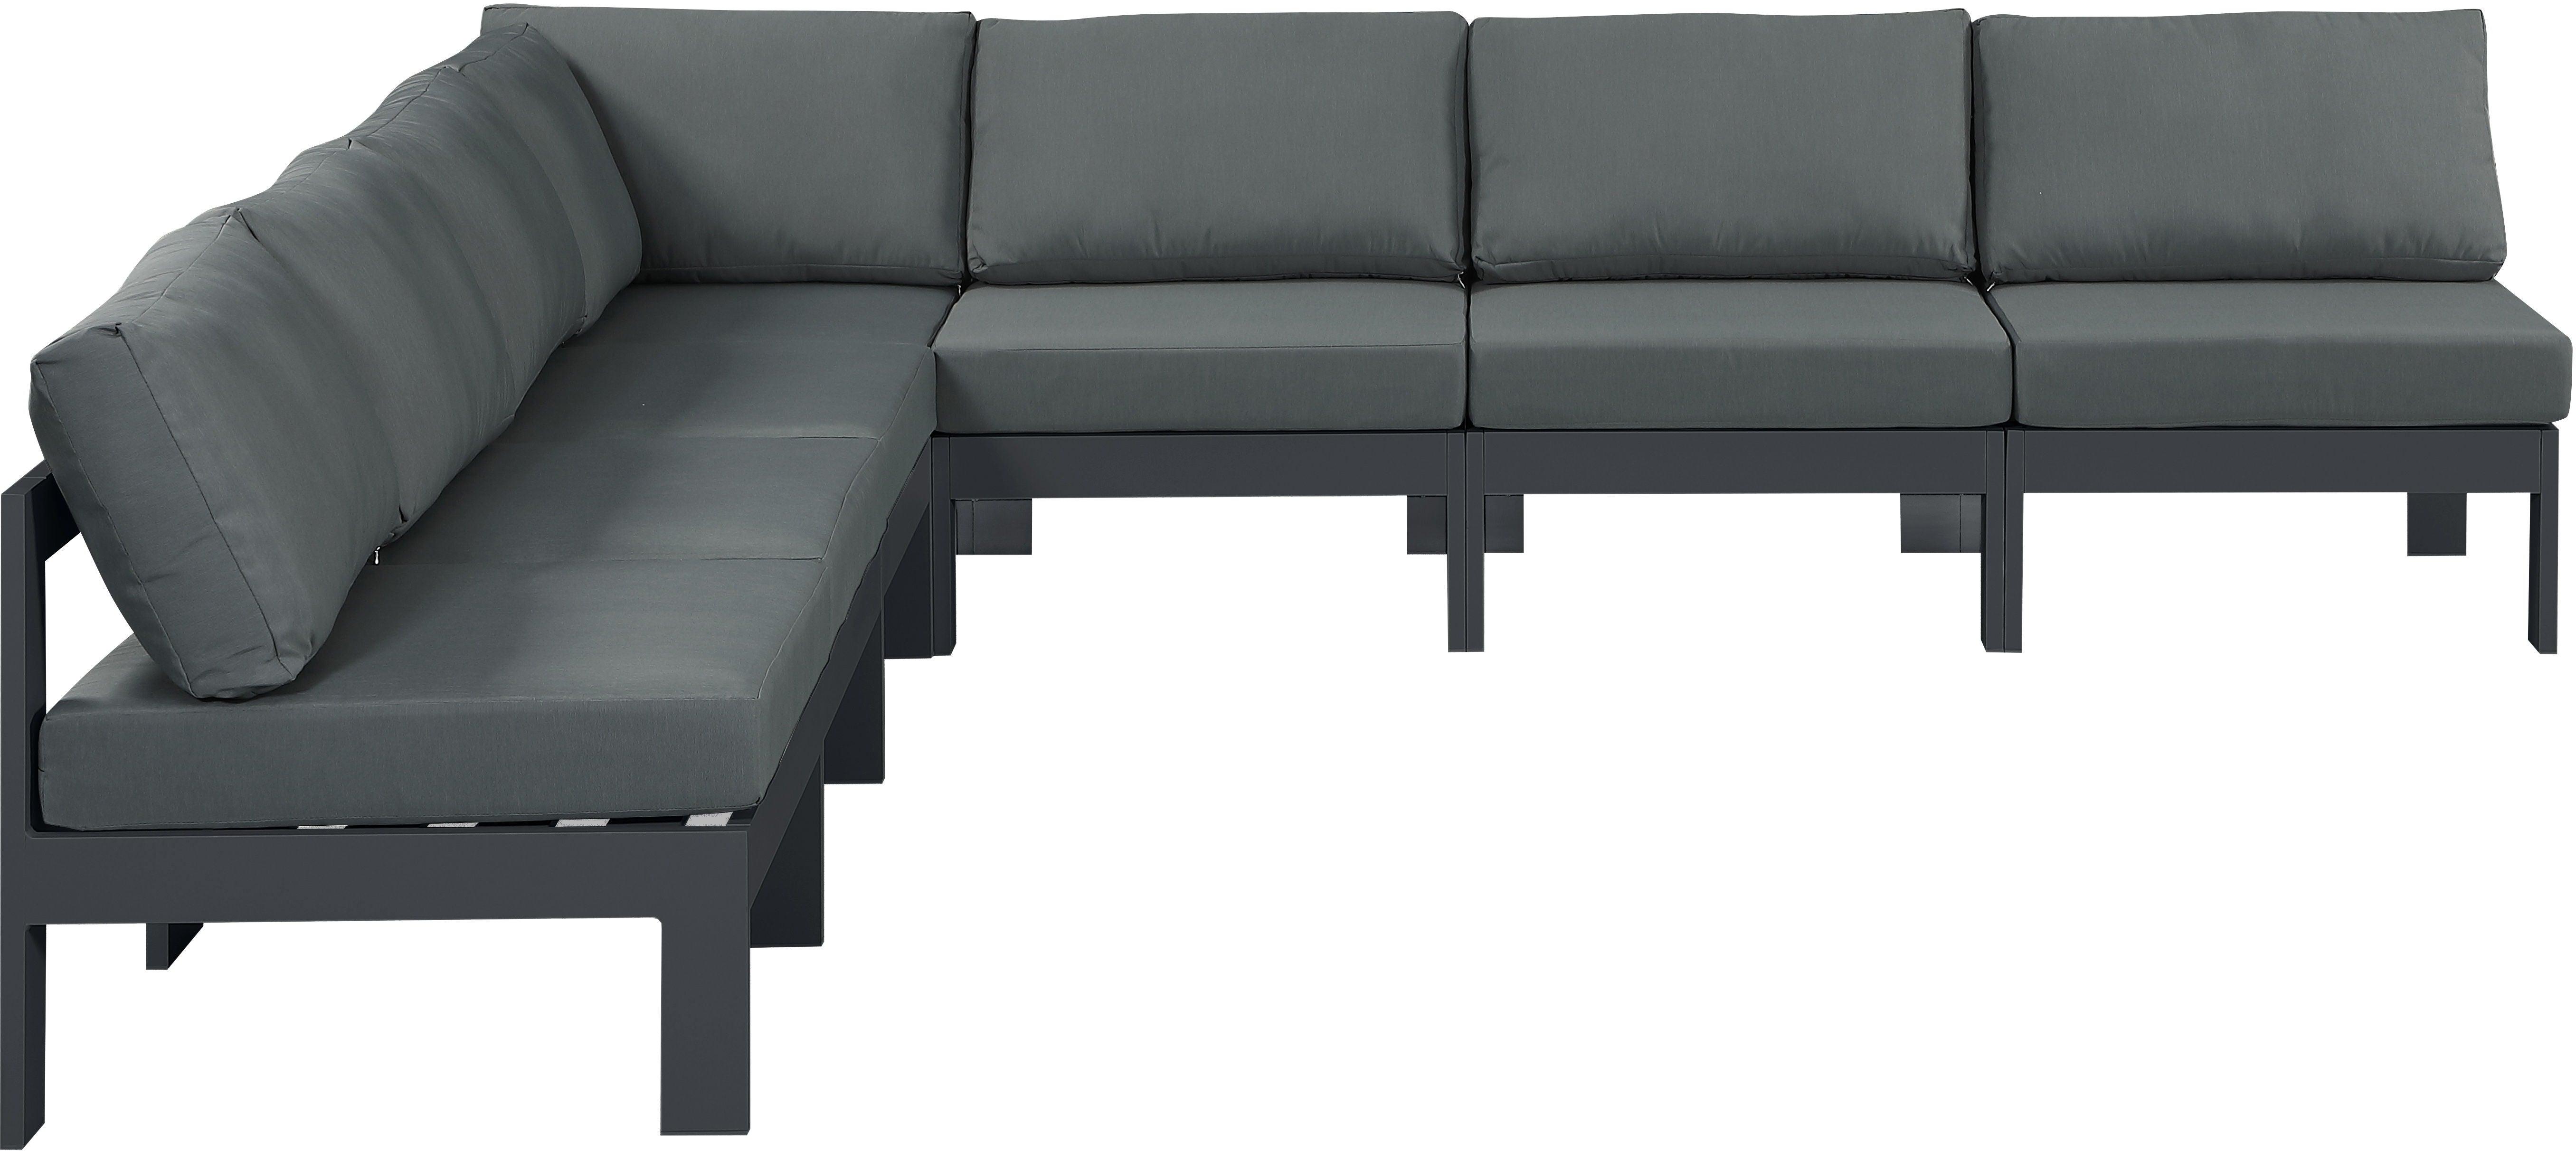 Meridian Furniture - Nizuc - Outdoor Patio Modular Sectional 7 Piece - Gray Dark - Fabric - Modern & Contemporary - 5th Avenue Furniture